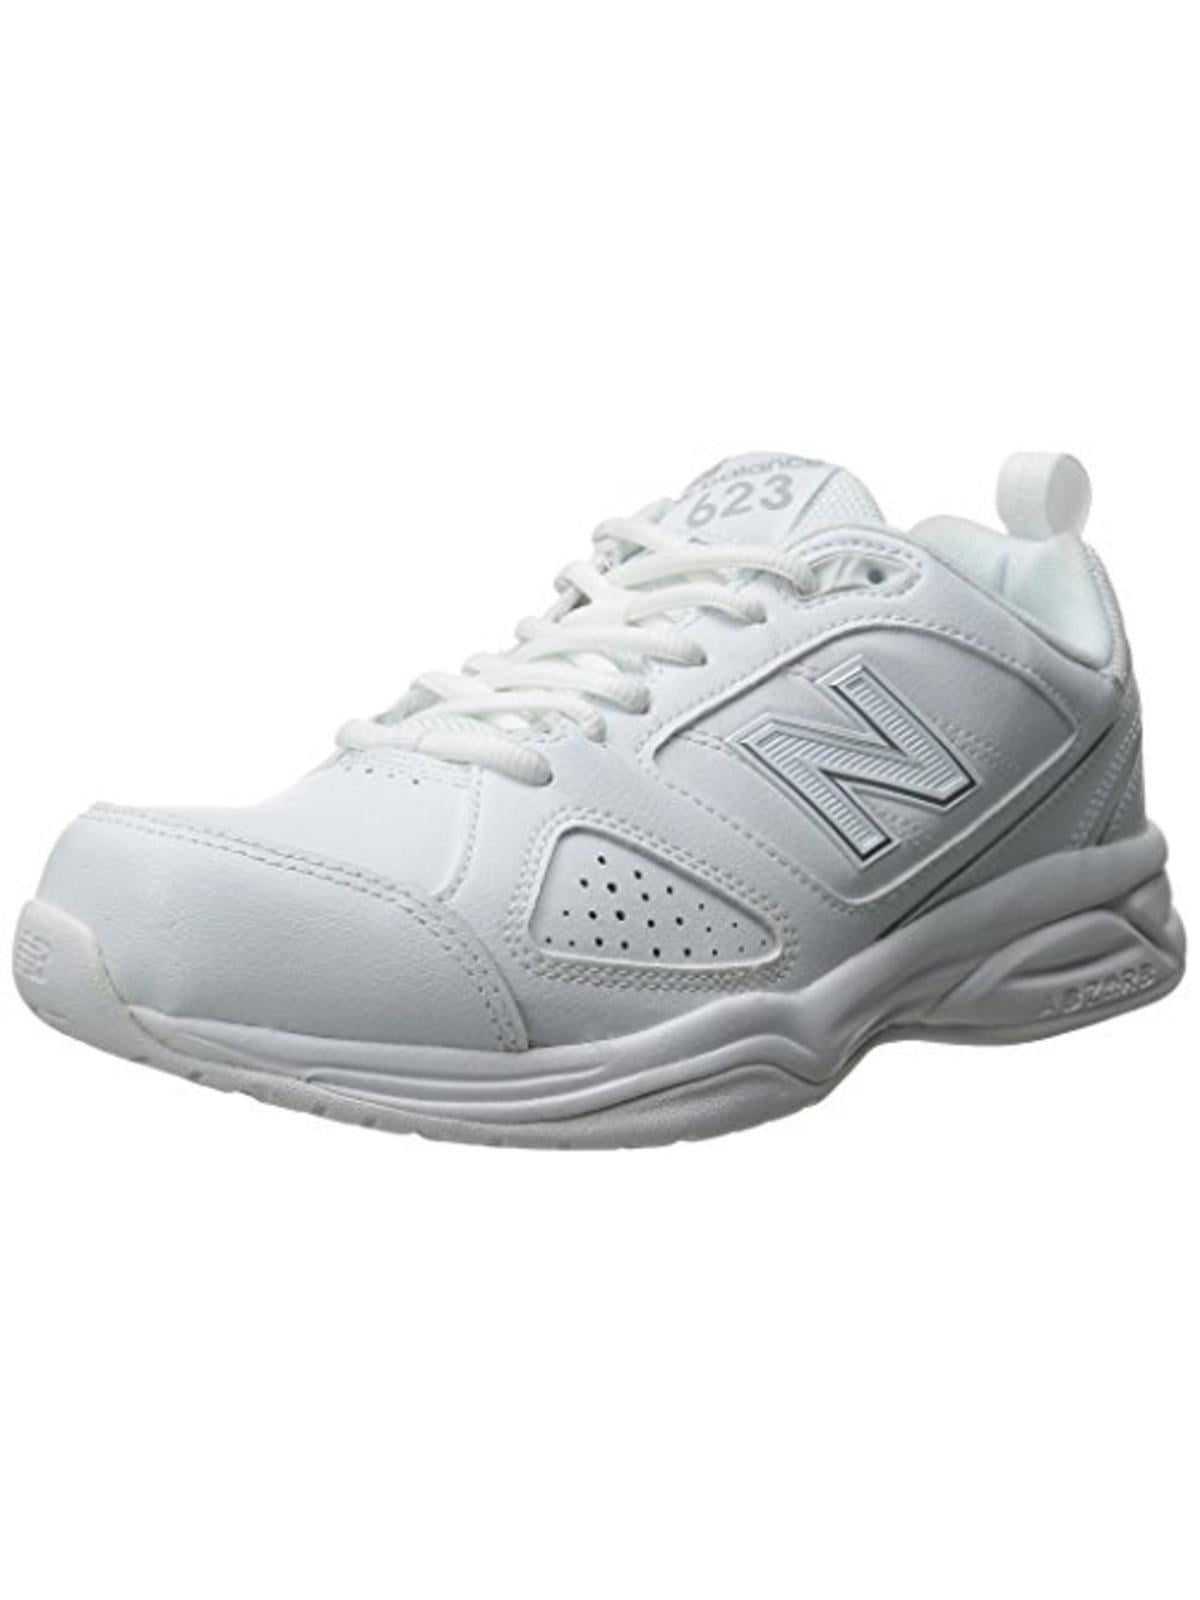 New Balance Women's 623v3 Shoes White - Walmart.com